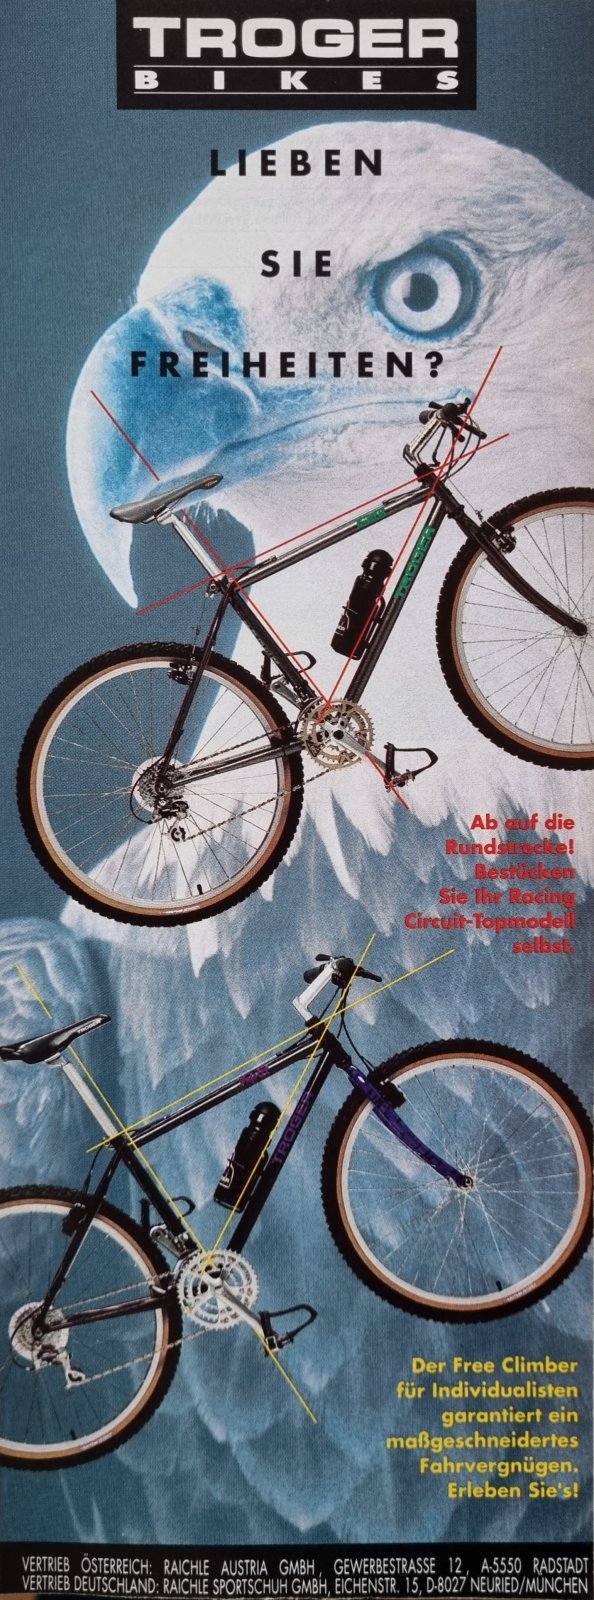 Troger Ad aus Bike 4 1992.jpg